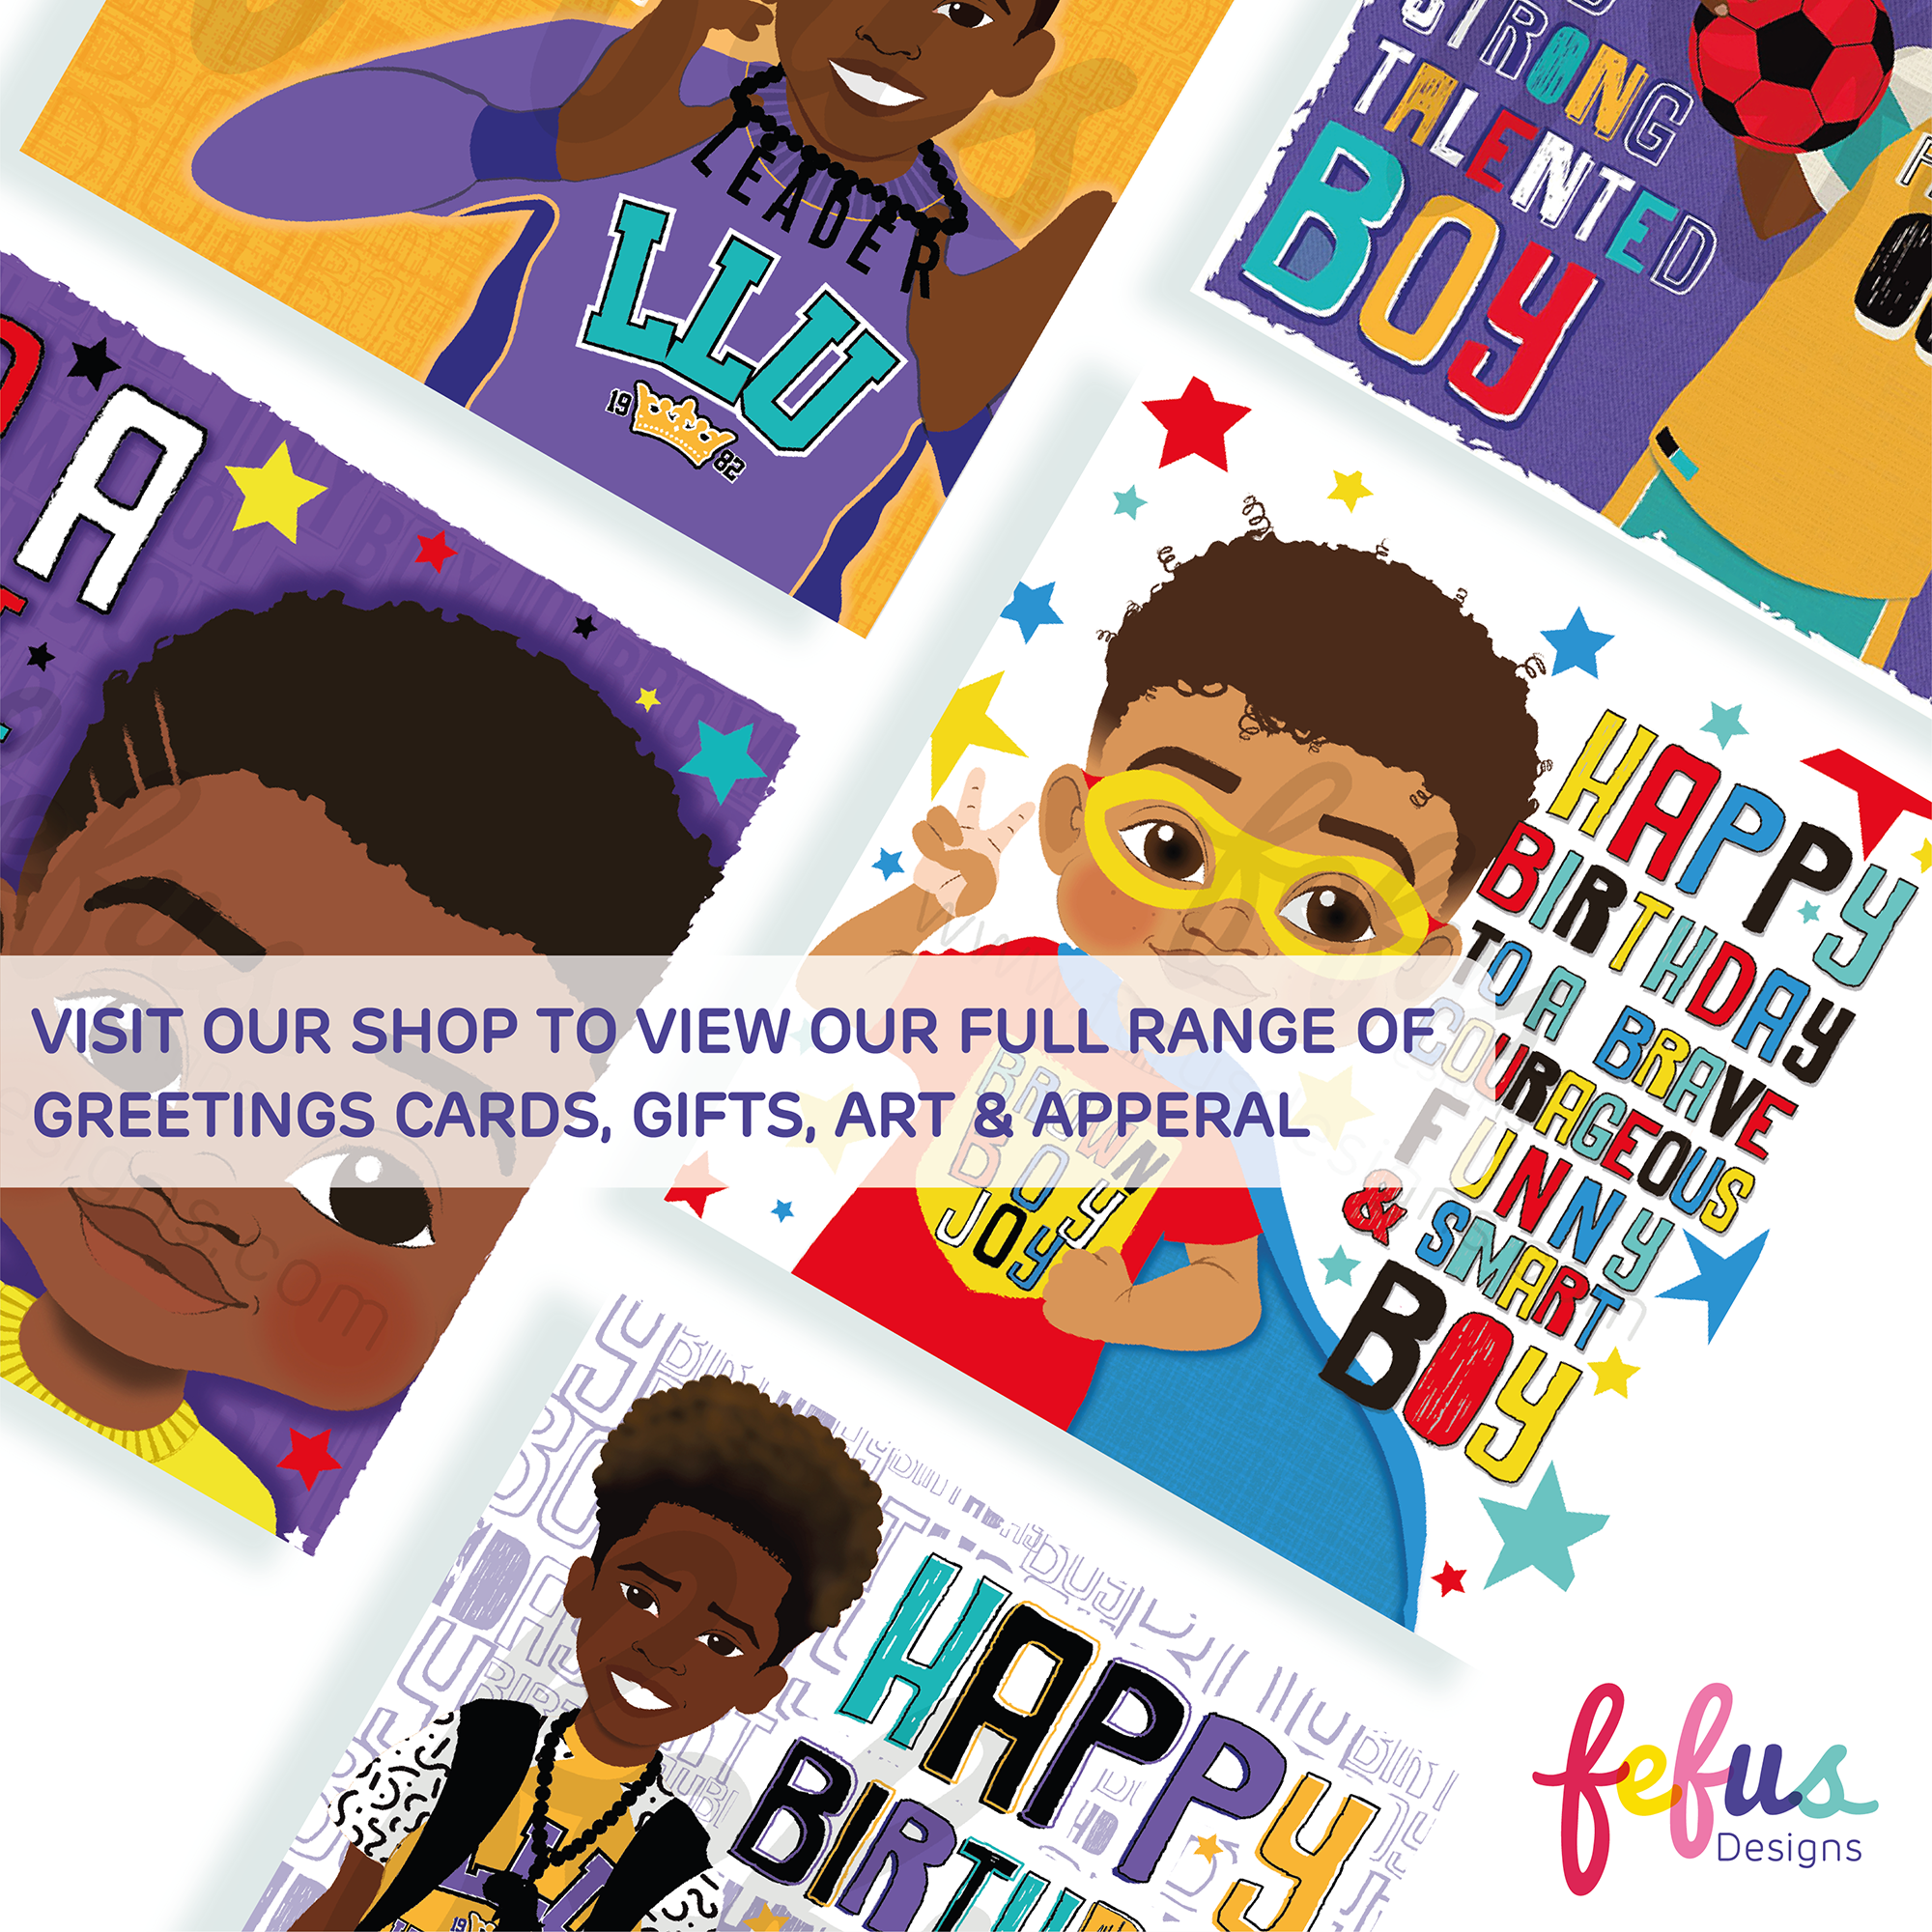 Second Birthday - Black Boys Birthday Card | Fefus designs